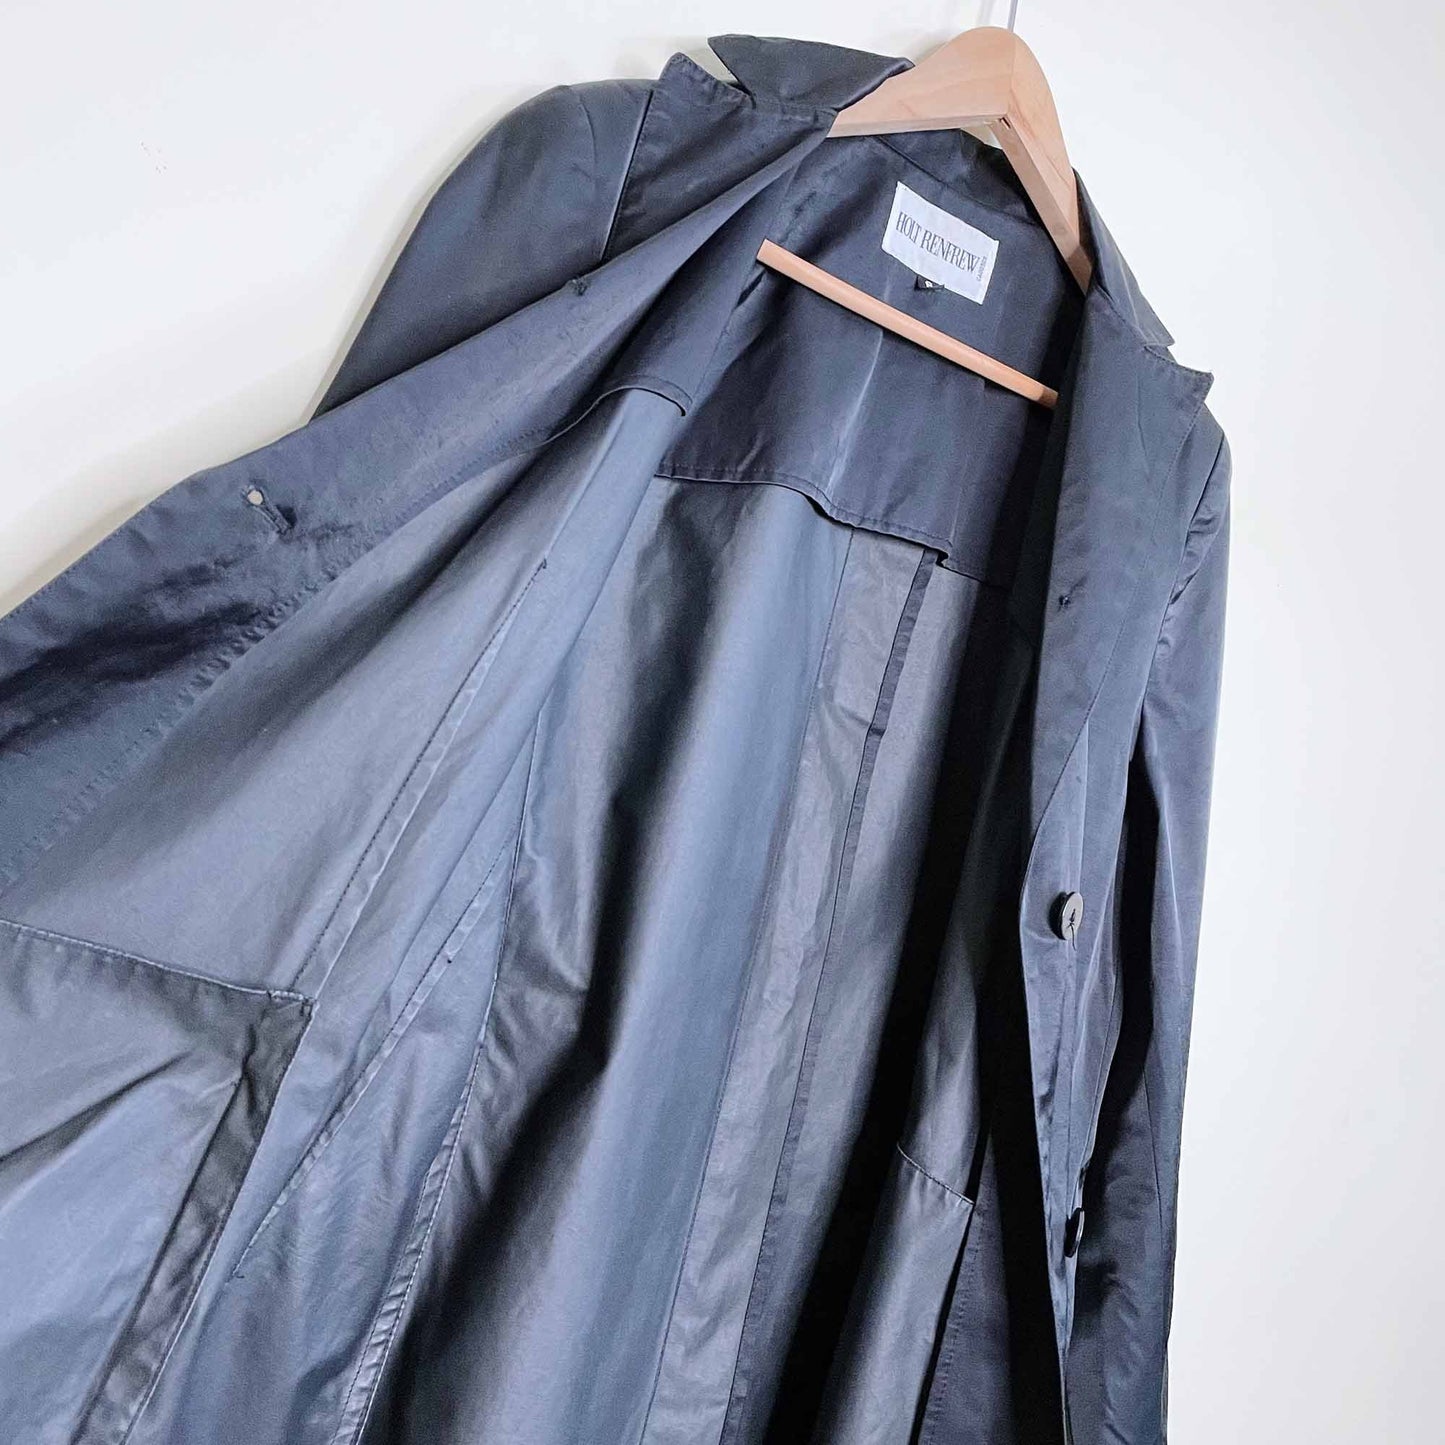 vintage holt renfrew black trench rain coat - size 8